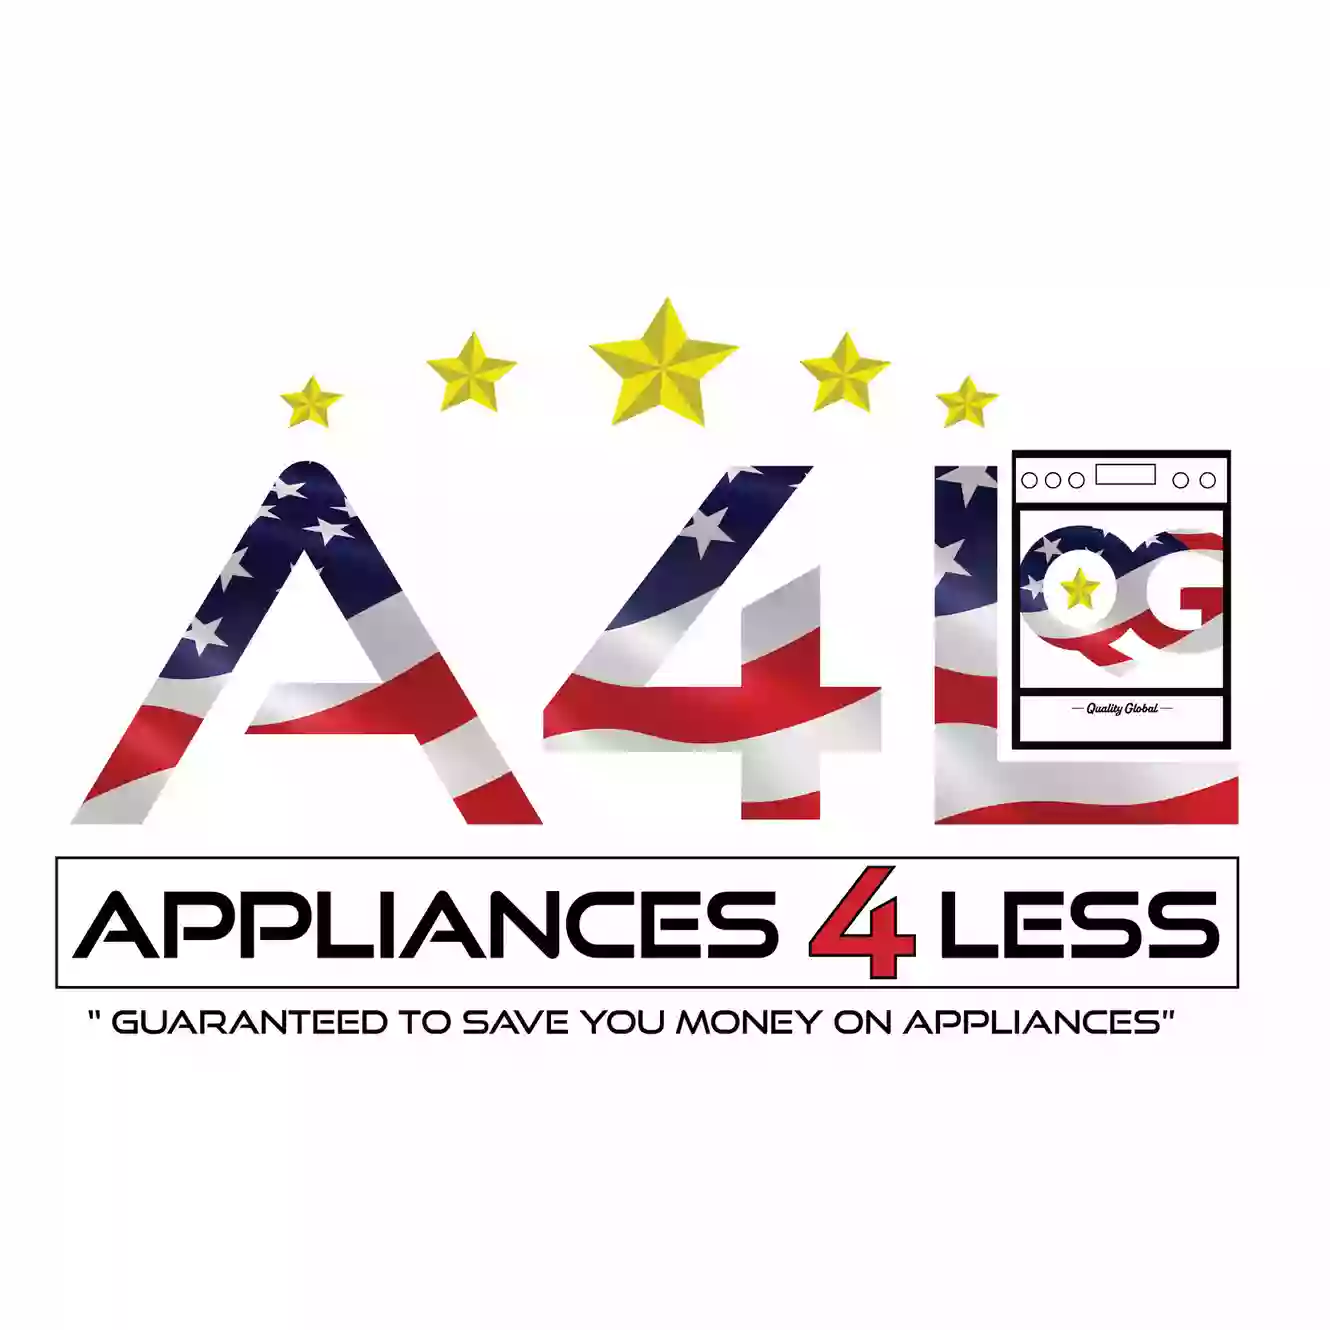 CNY Appliances 4 Less